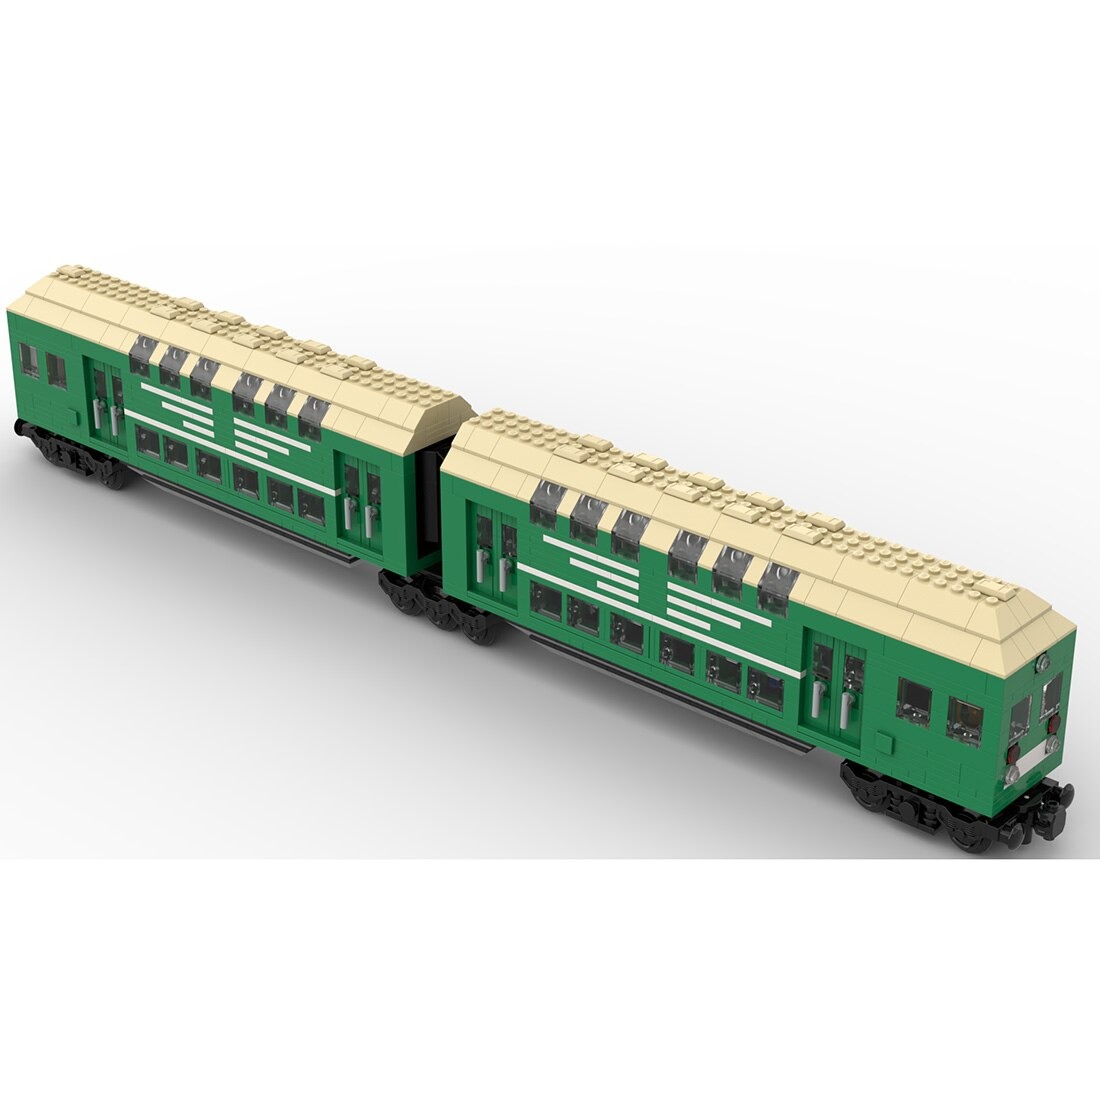 authorized moc 109281 7 axle train carri main 4 - ZHEGAO Block